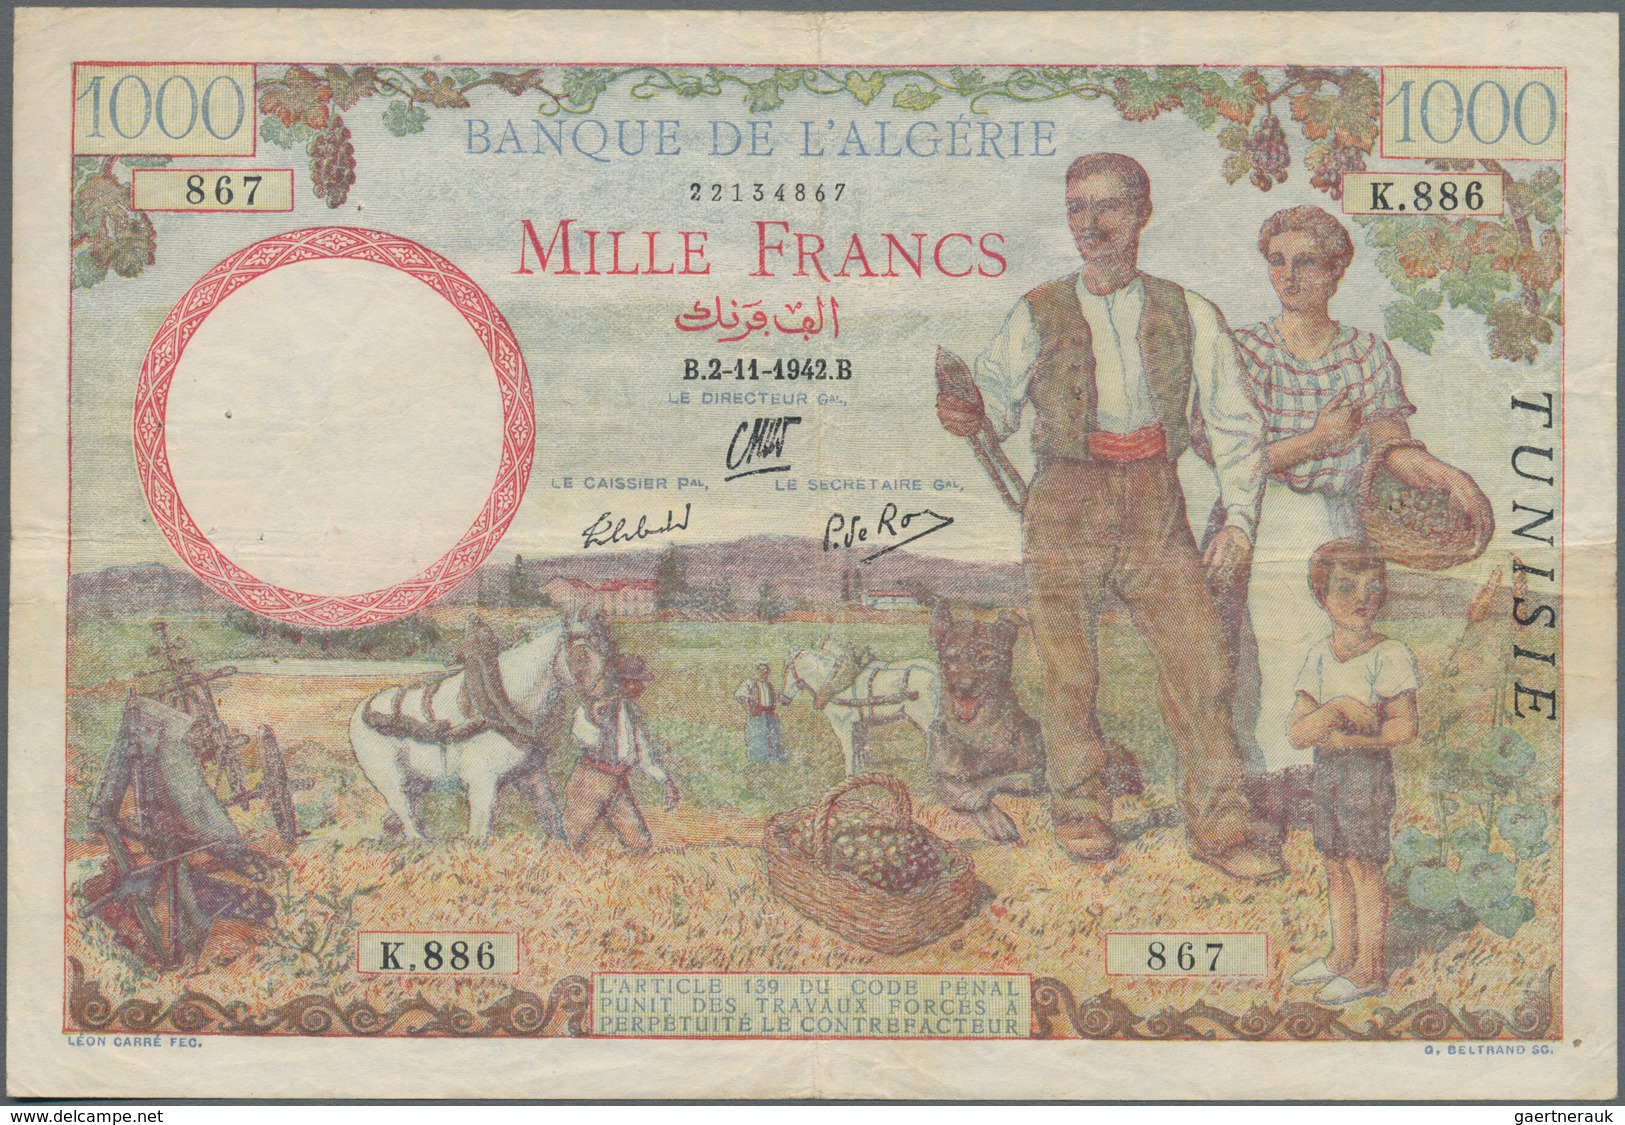 Tunisia / Tunisien: Banque De L'Algérie 1000 Francs 1942 With "TUNISIE" Overprint At Right On Algeri - Tunesien